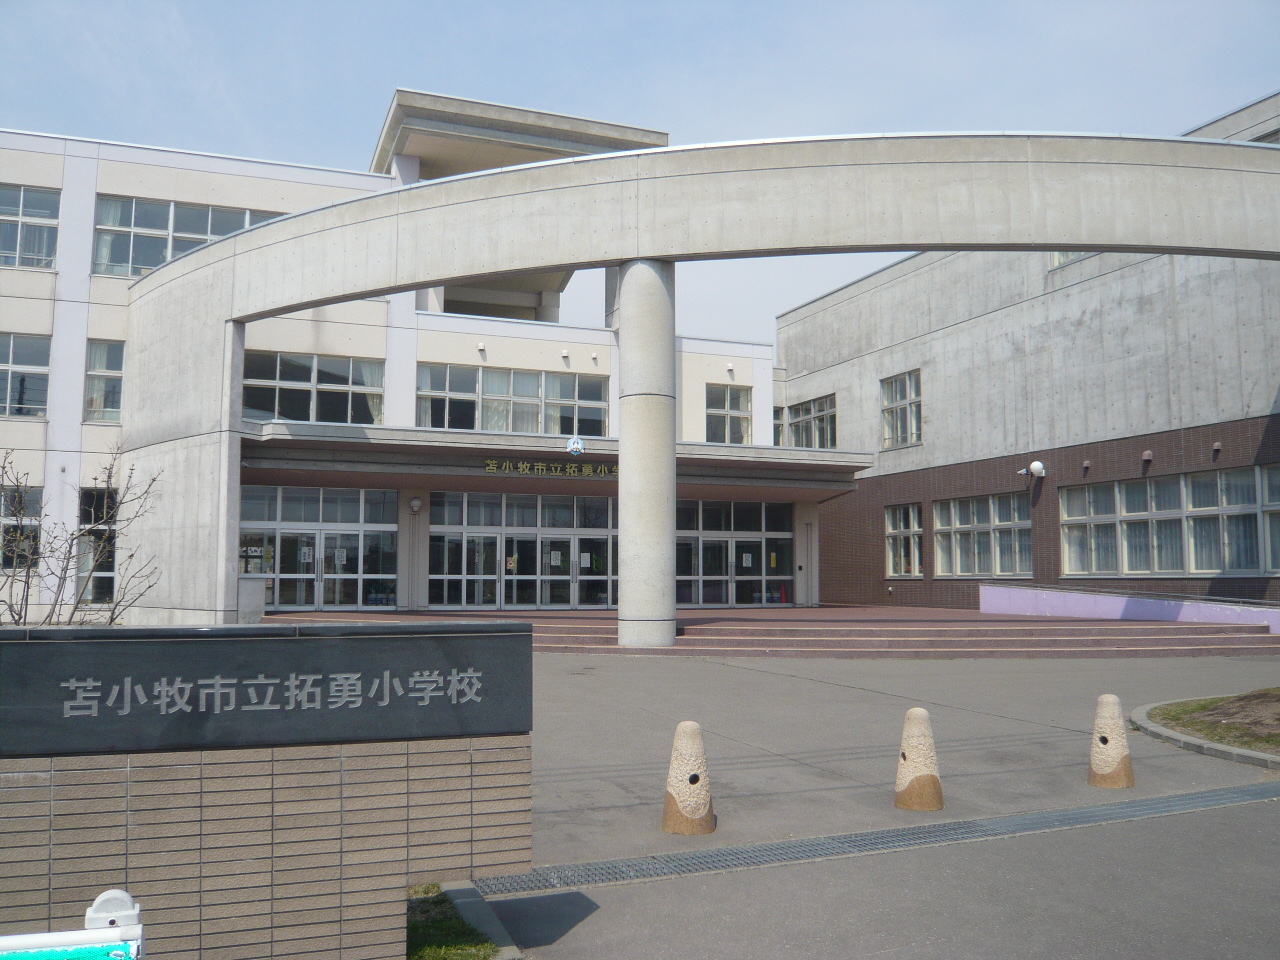 Primary school. 1120m to Tomakomai City TakuIsamu elementary school (elementary school)